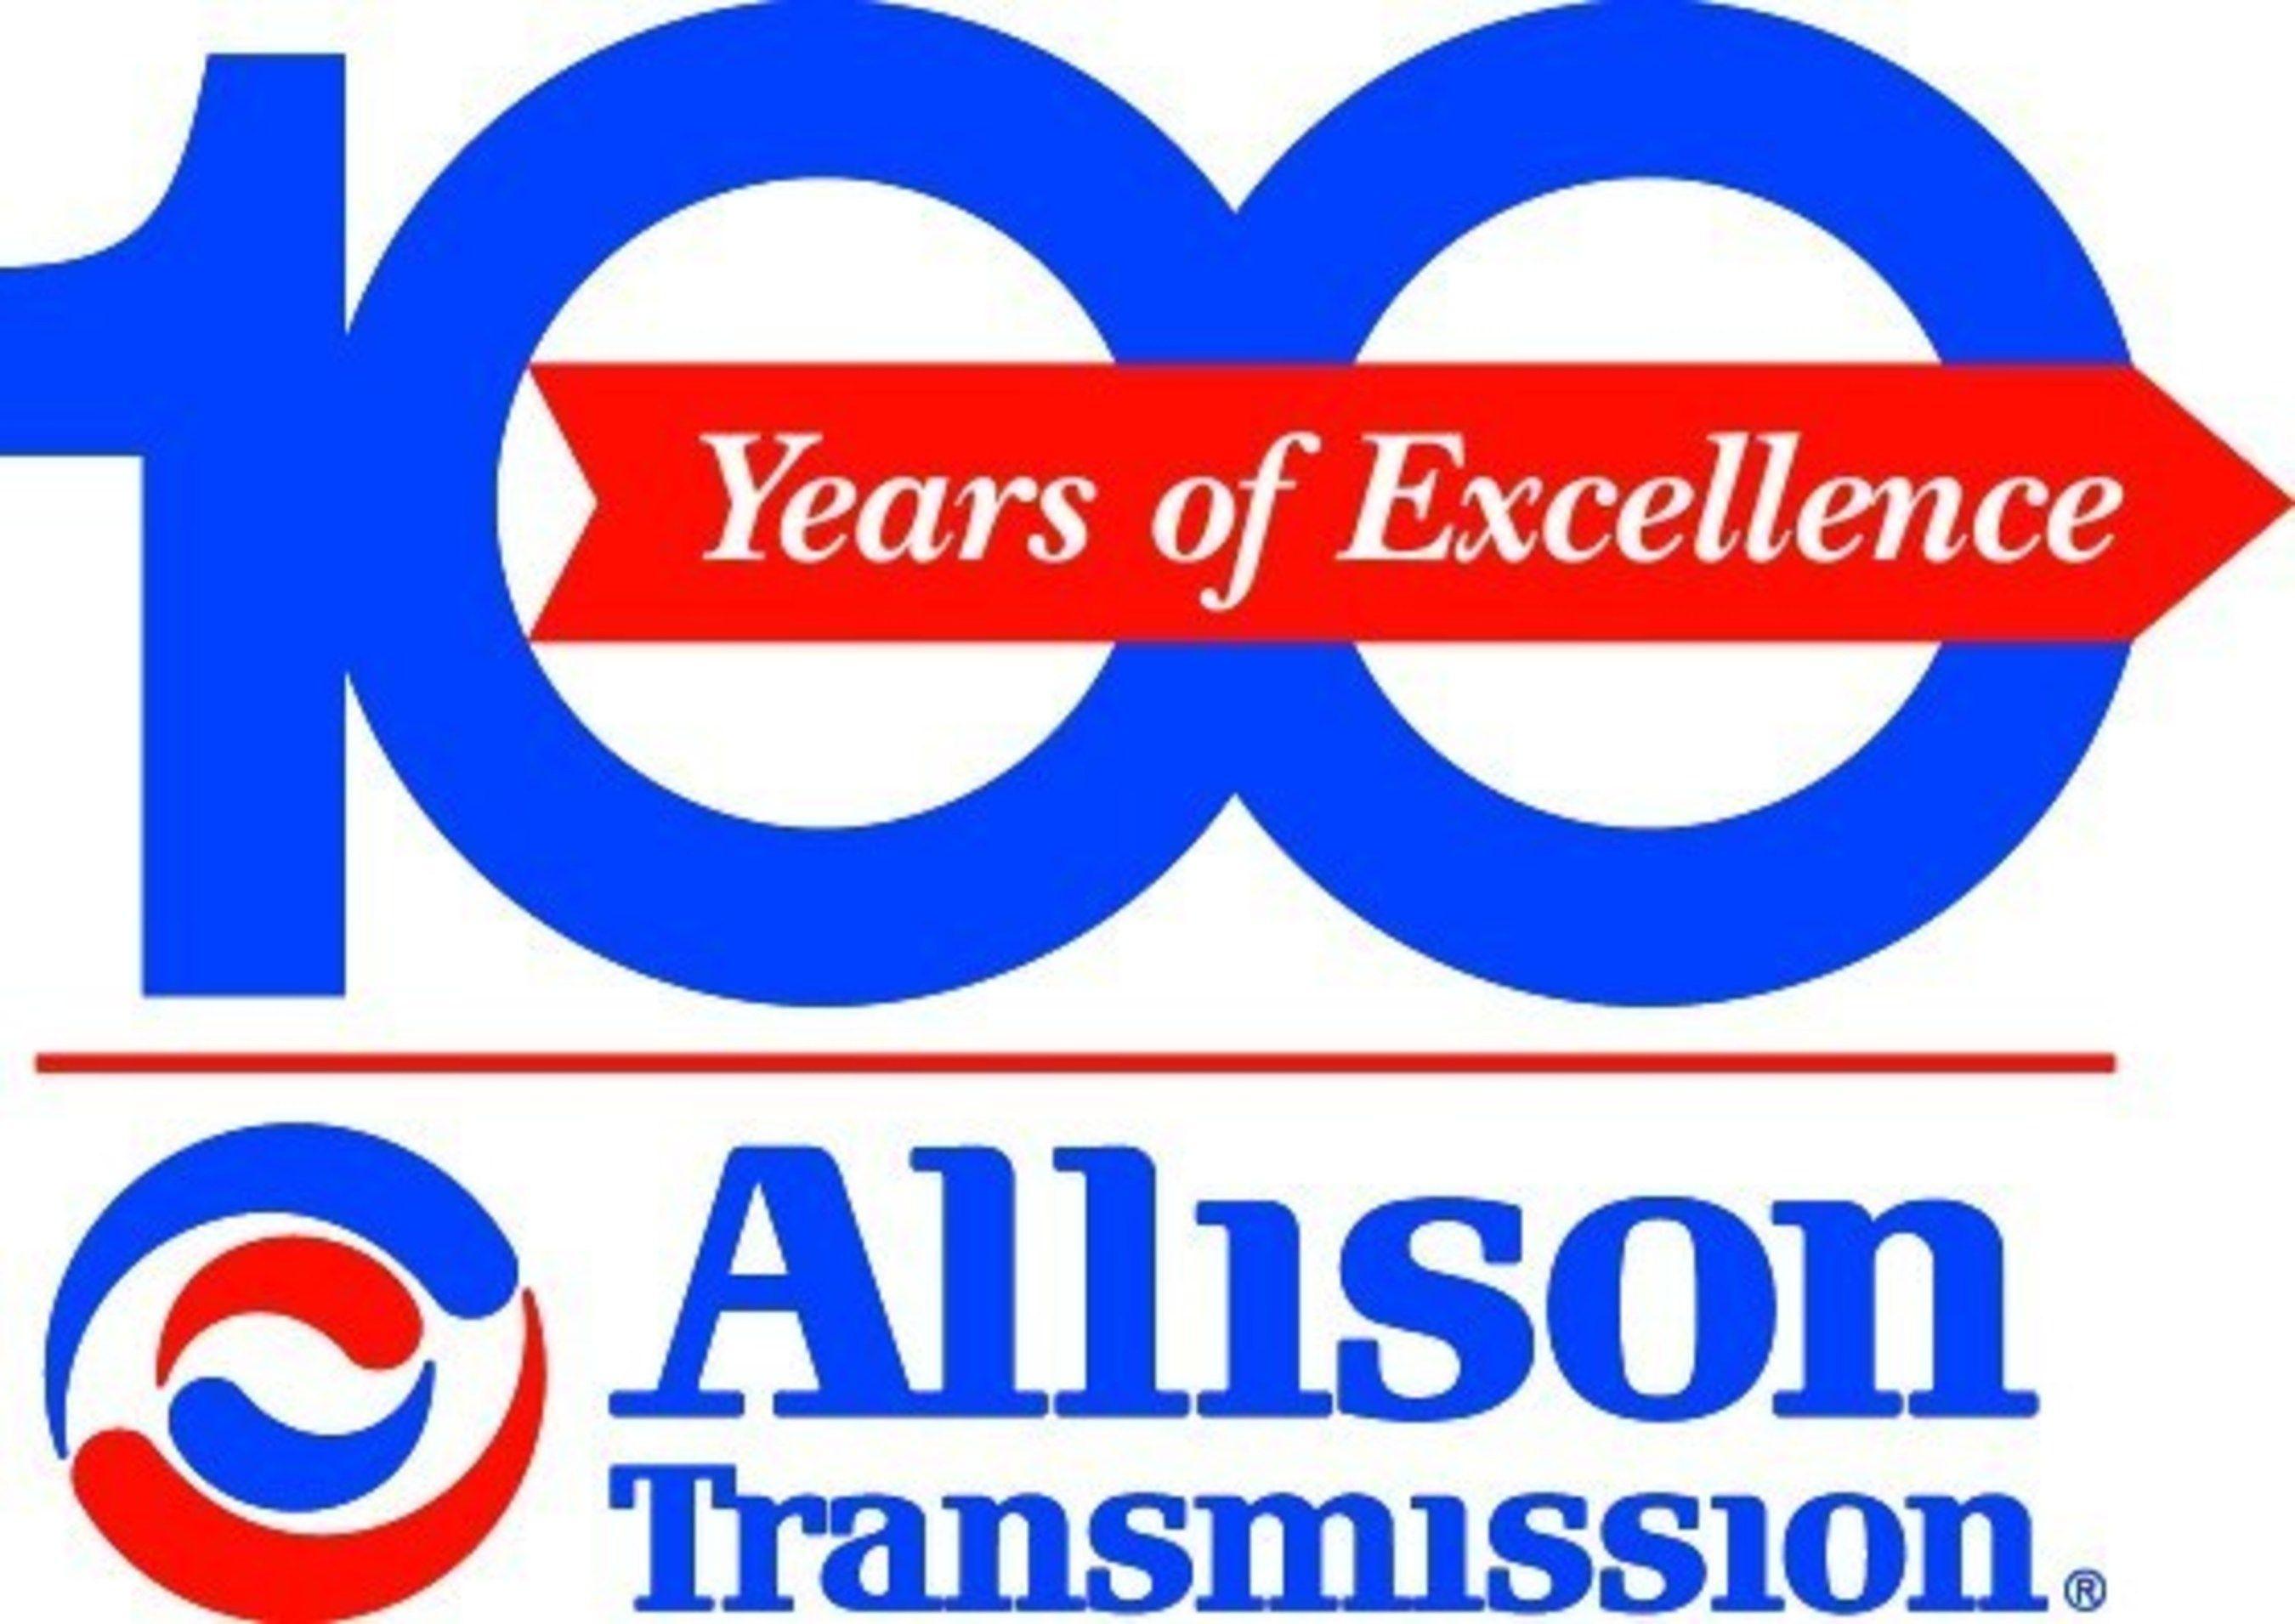 Allison Transmission Logo - Allison Transmission announces xFE models with technology to further ...